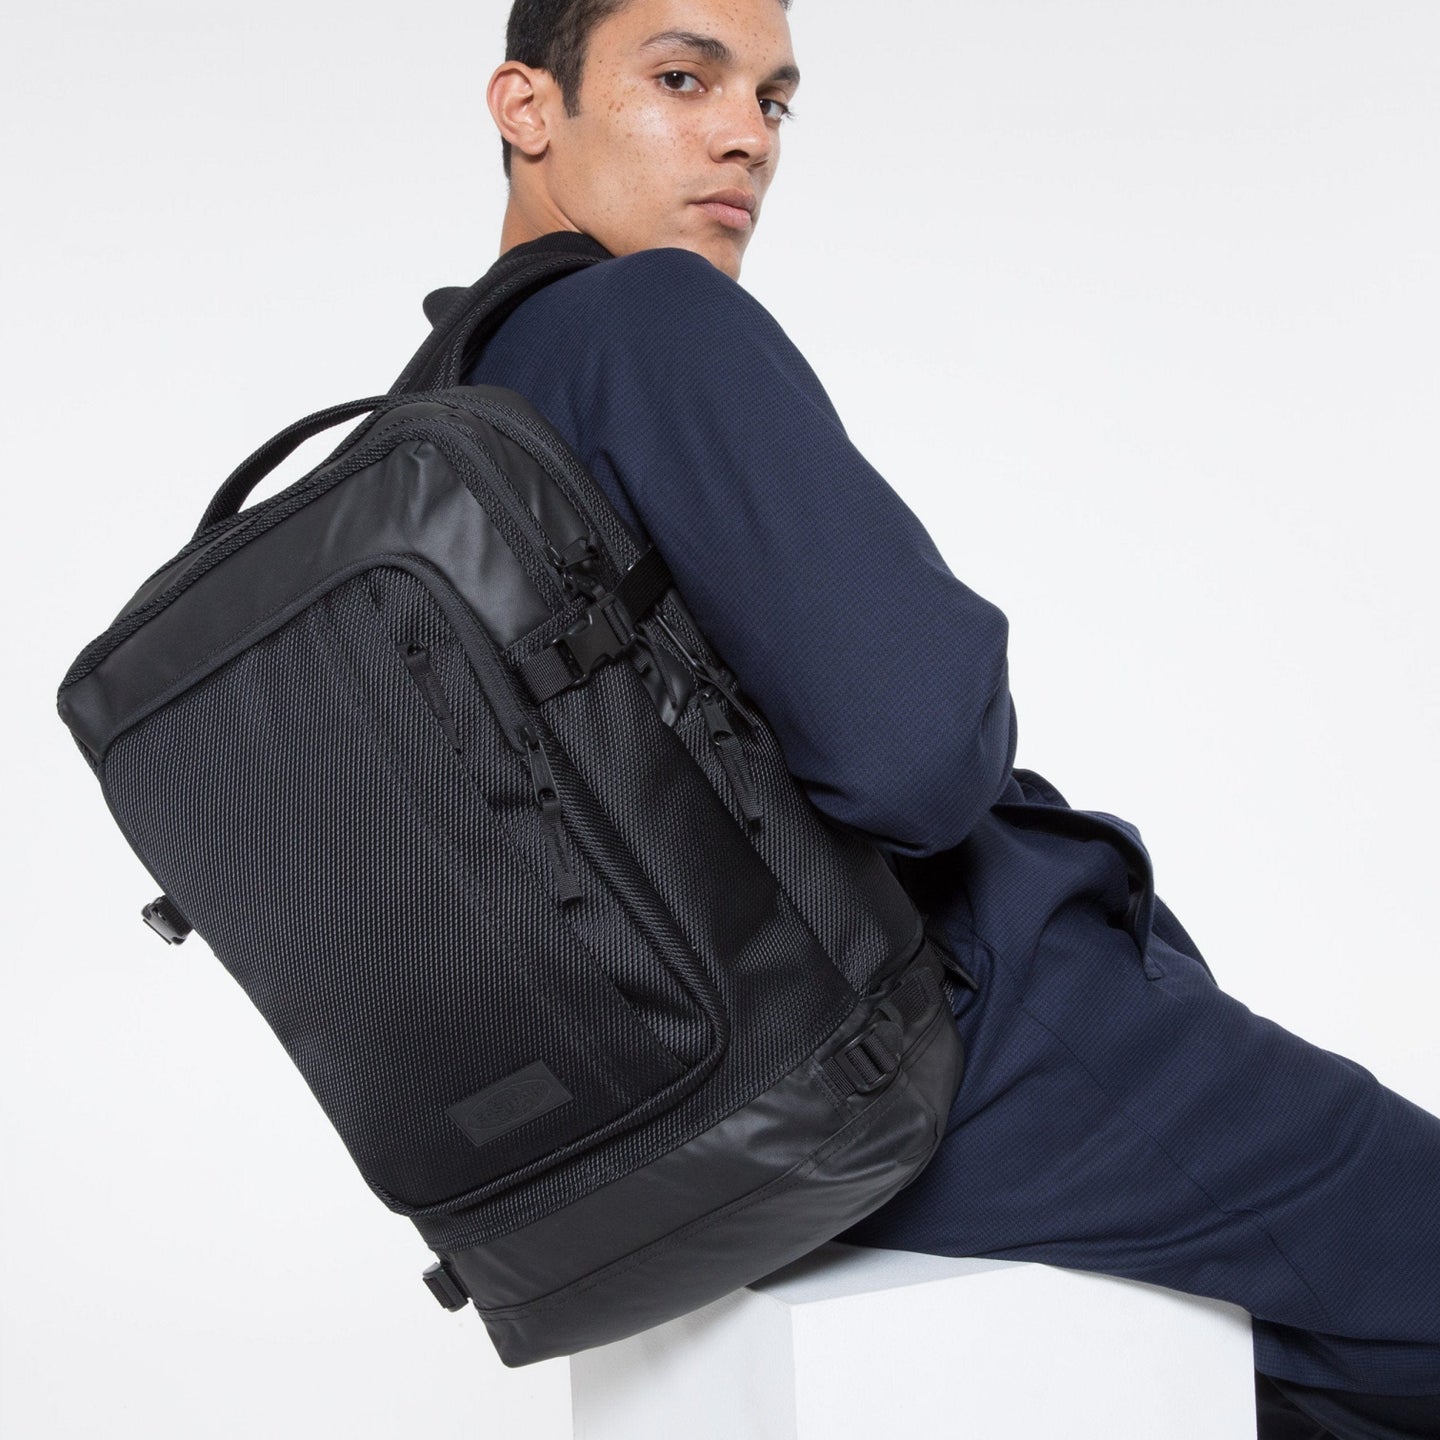 Tecum L Cnnct Coat Professional Backpack Front View Over Shoulder Of Model